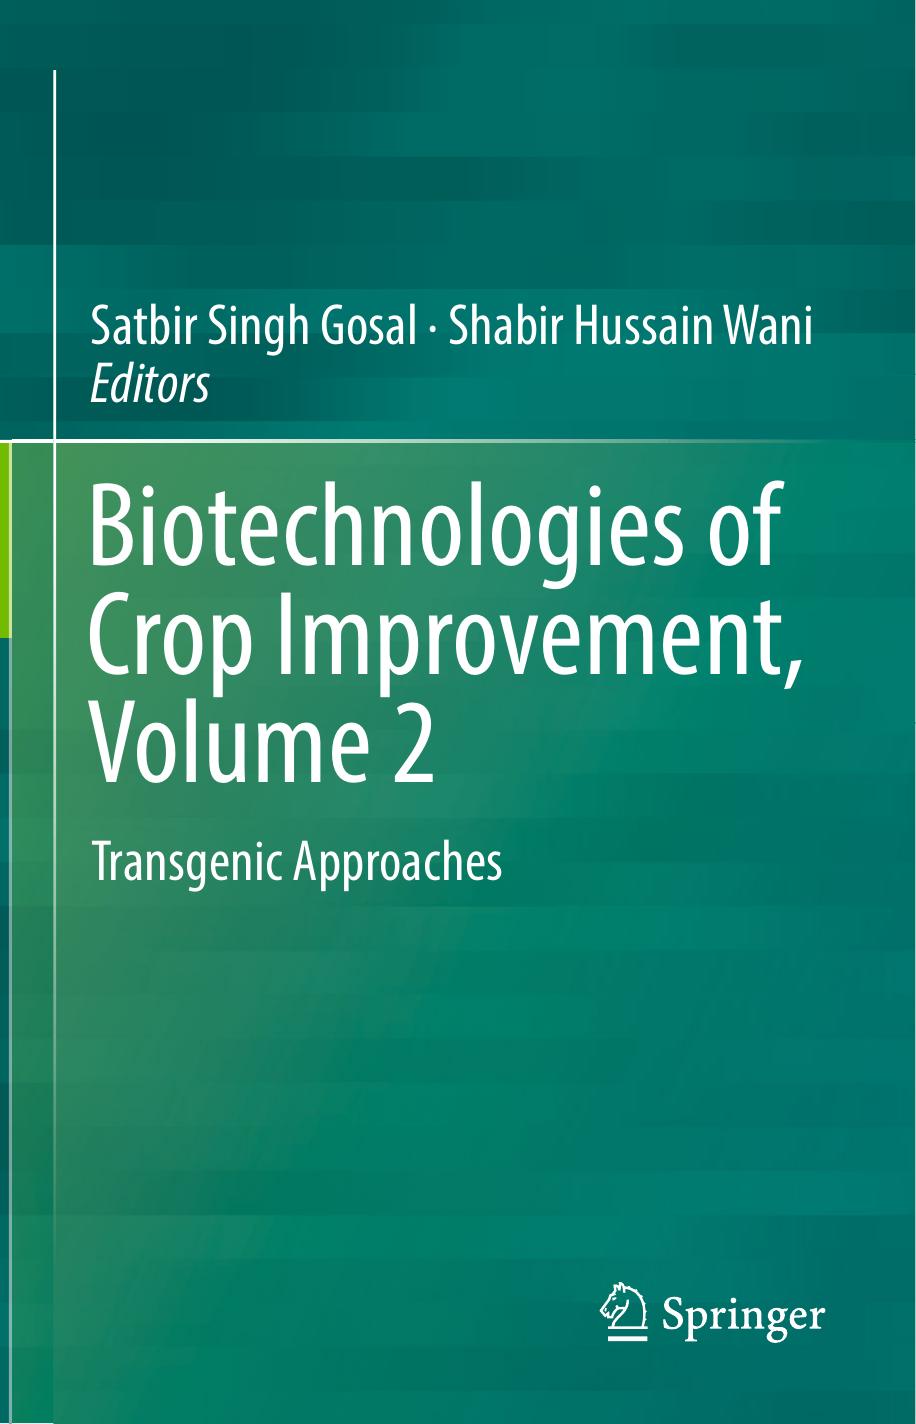 Biotechnologies of Crop Improvement, Volume 2 Transgenic Approaches 2018